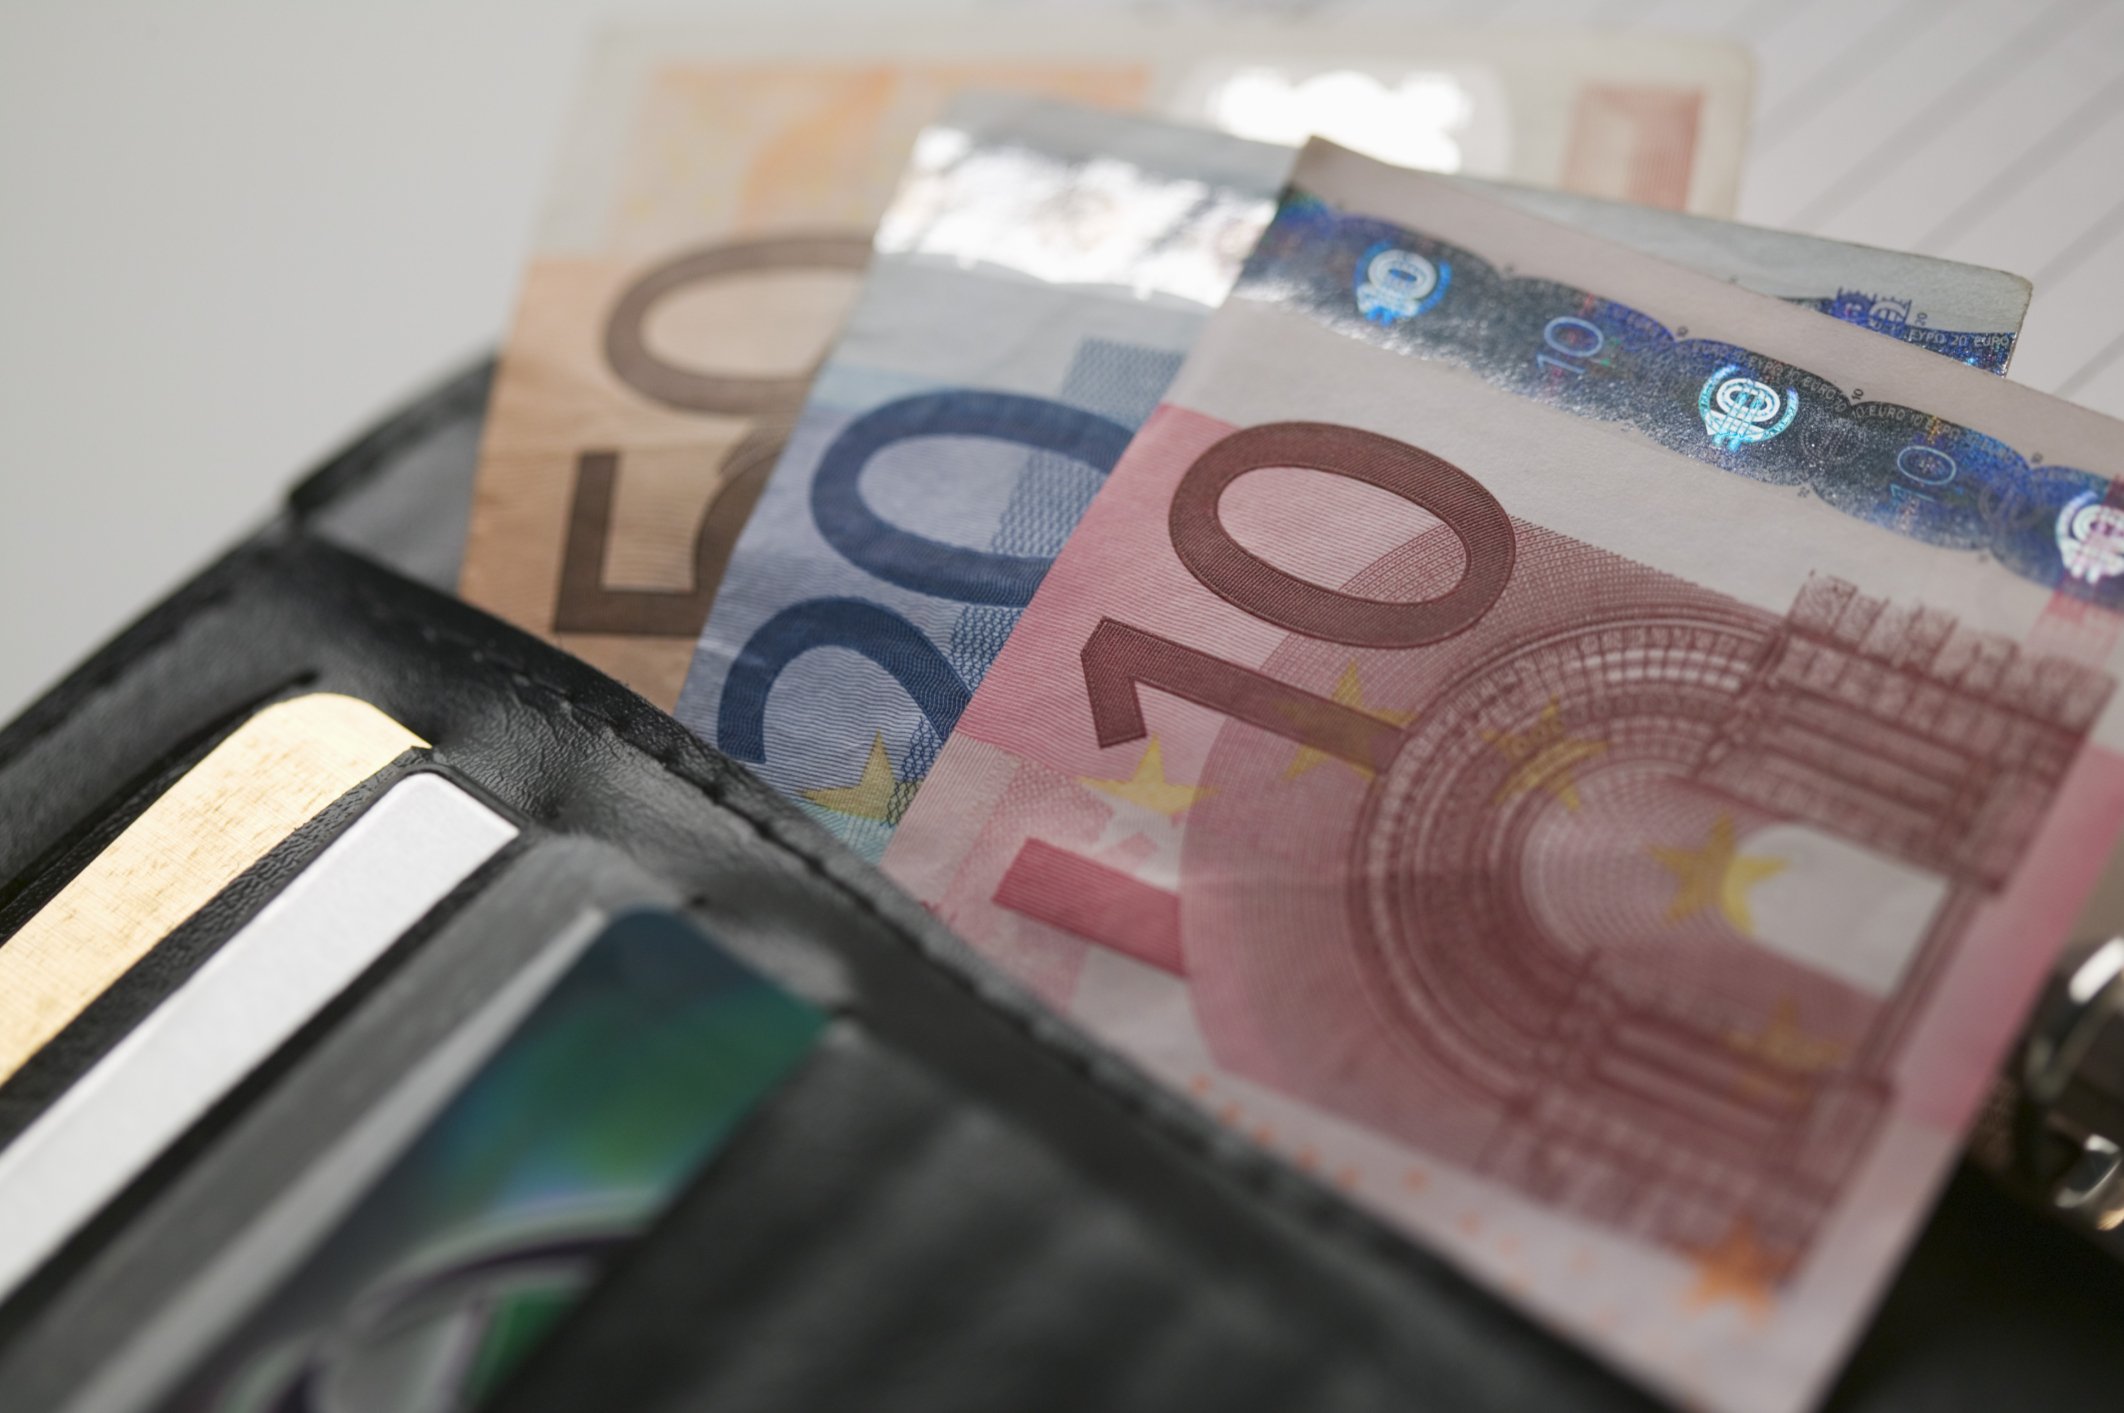 Aγιος Νικόλαος: Ζευγάρι τουριστών βρήκε και παρέδωσε πορτοφόλι με 7.000 ευρώ